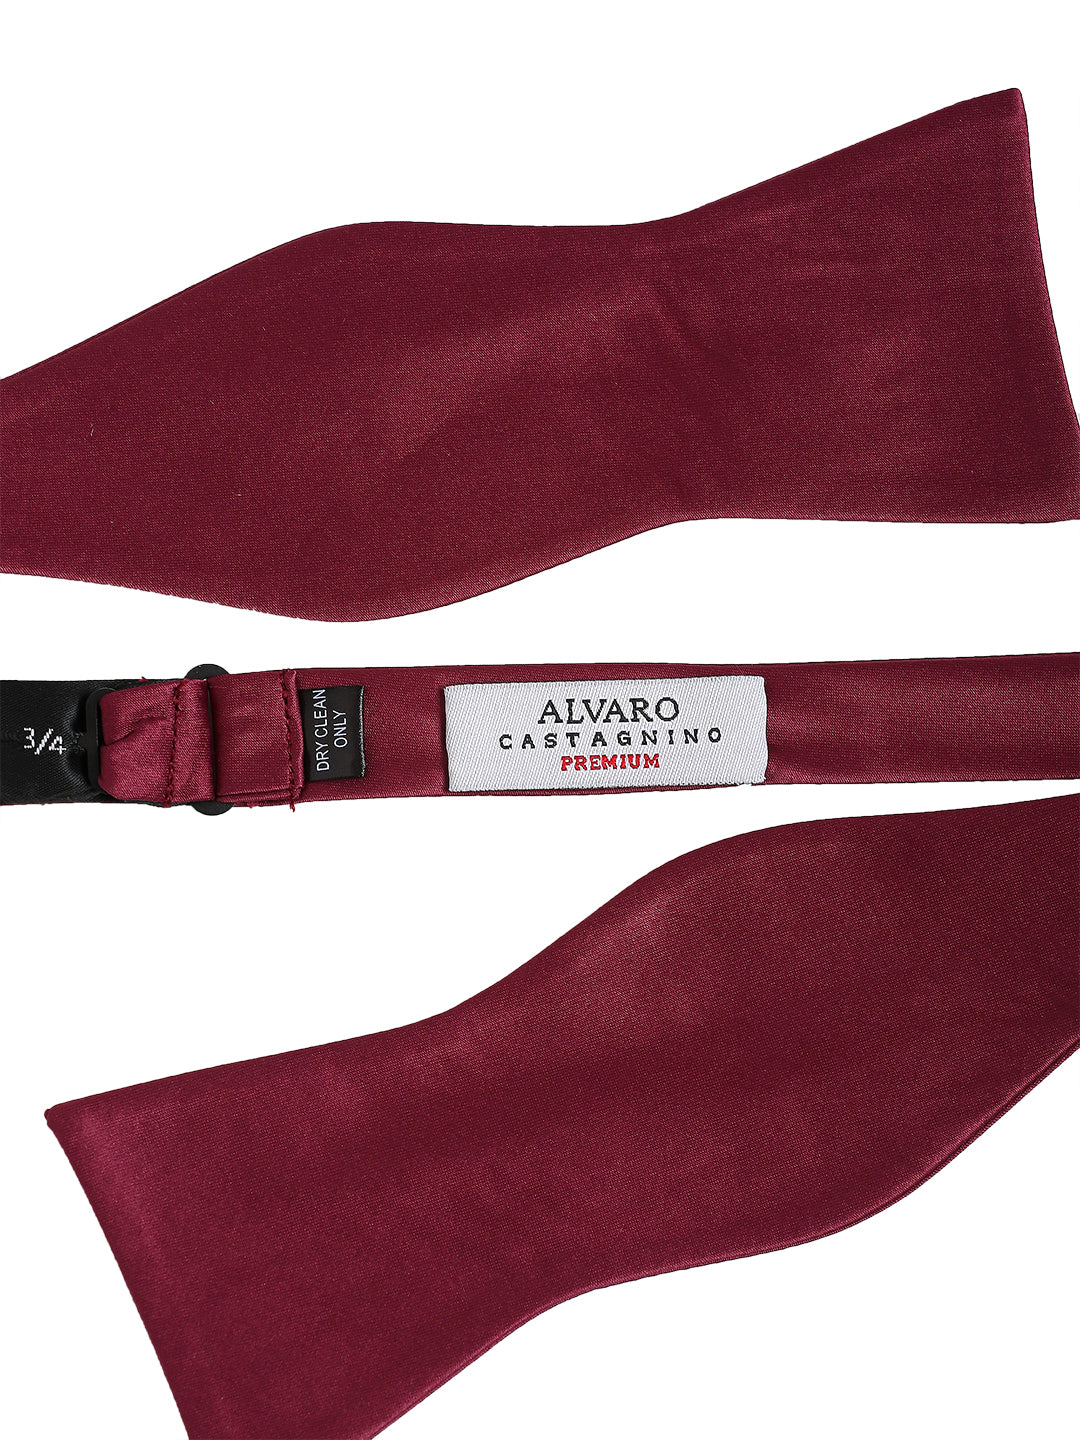 Alvaro Castagnino Men's Maroon Colored Microfiber Bow Tie